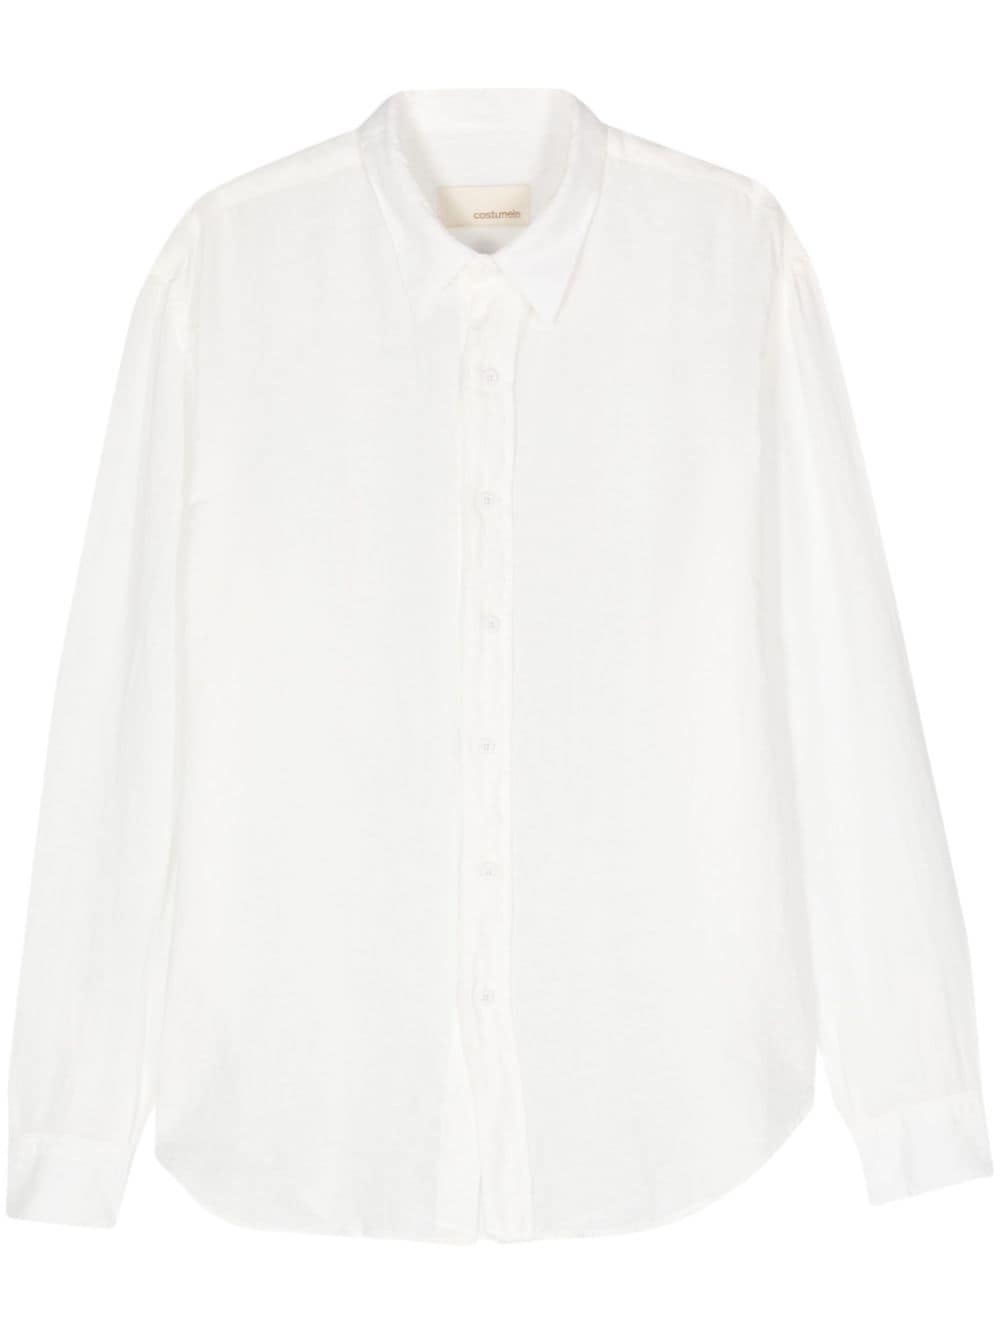 Costumein Long-sleeve Linen Shirt In White